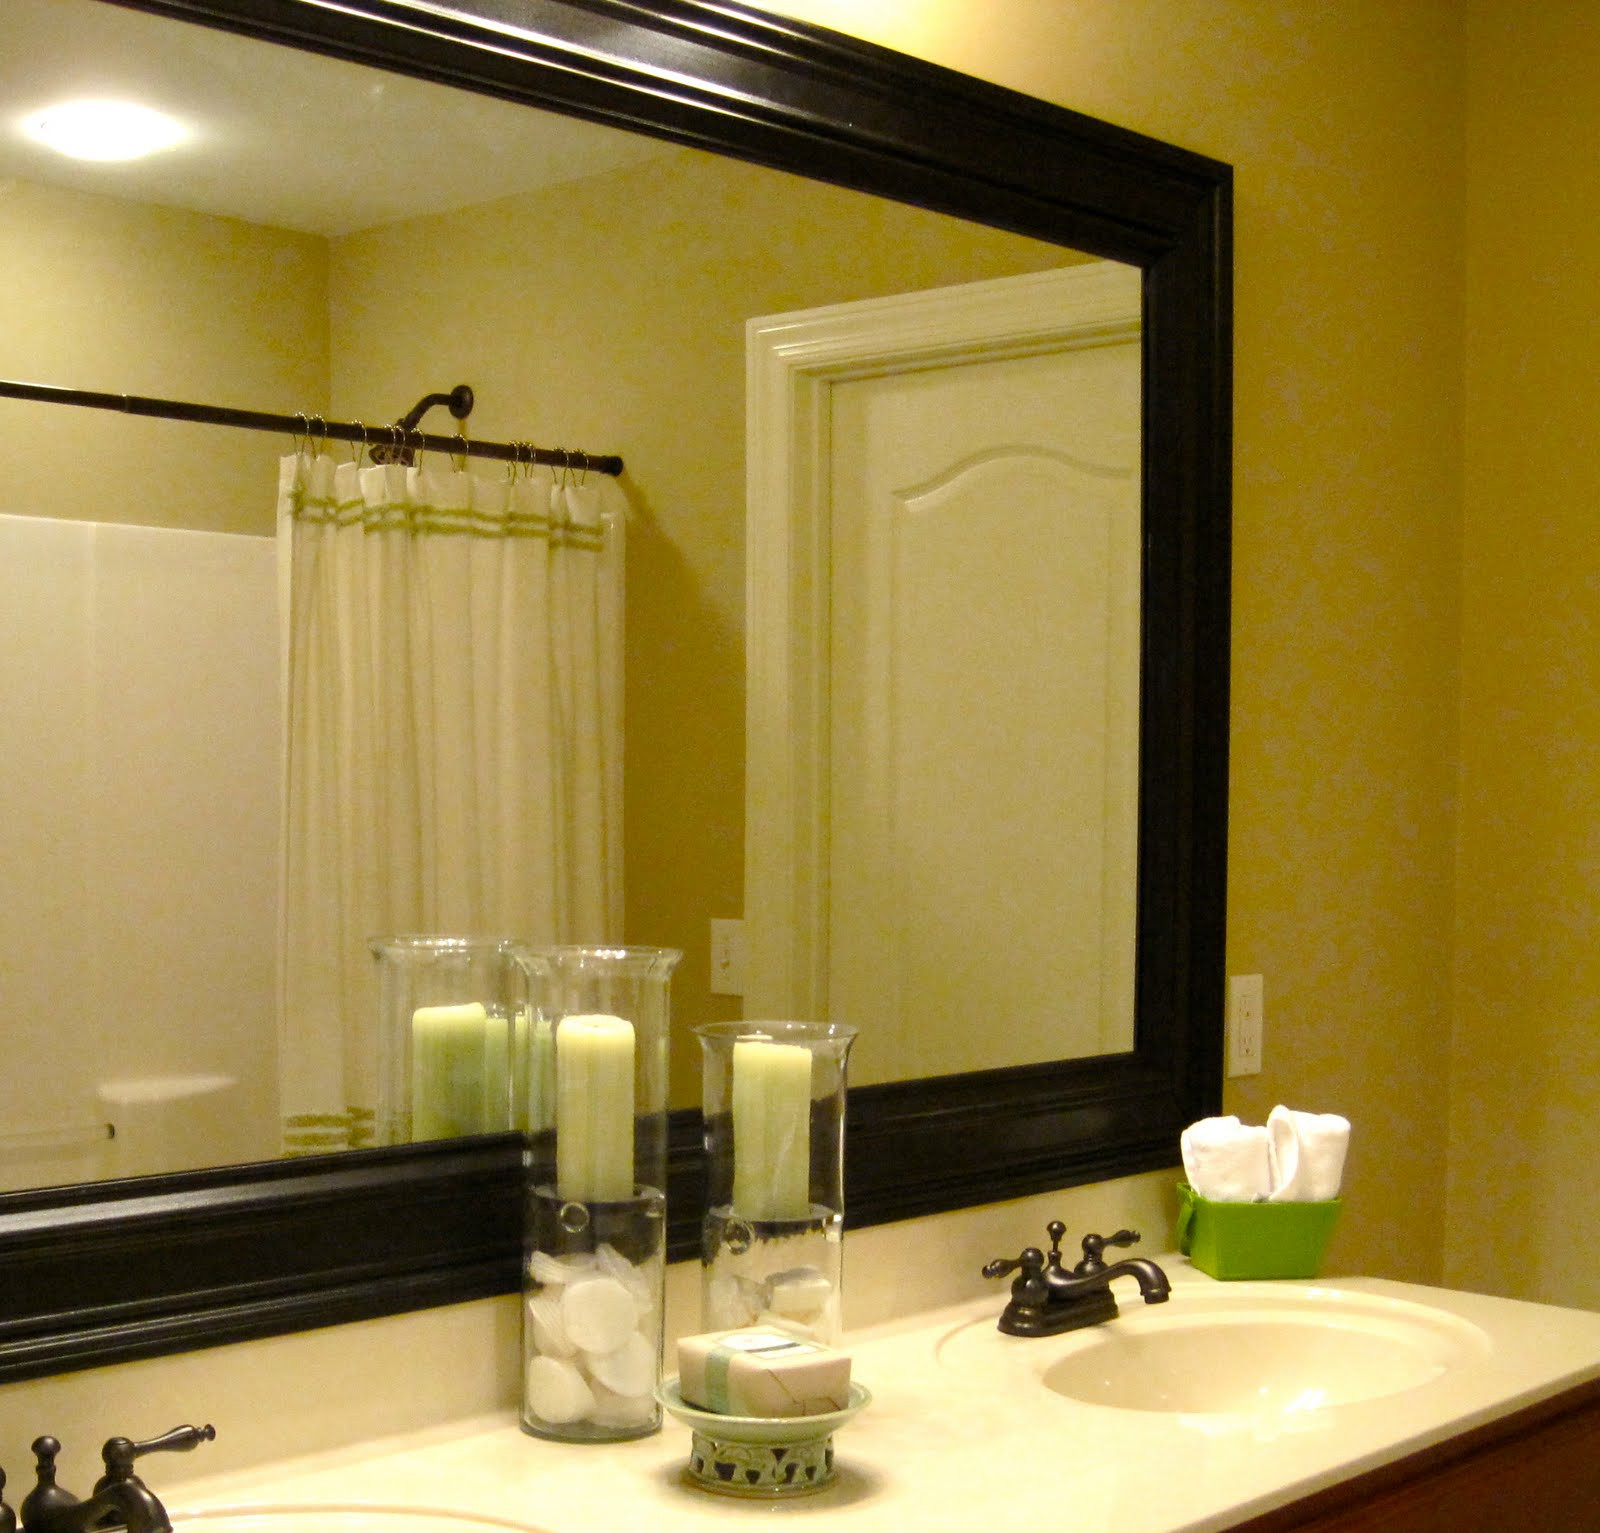 Large Framed Mirrors For Bathroom
 Remodelaholic